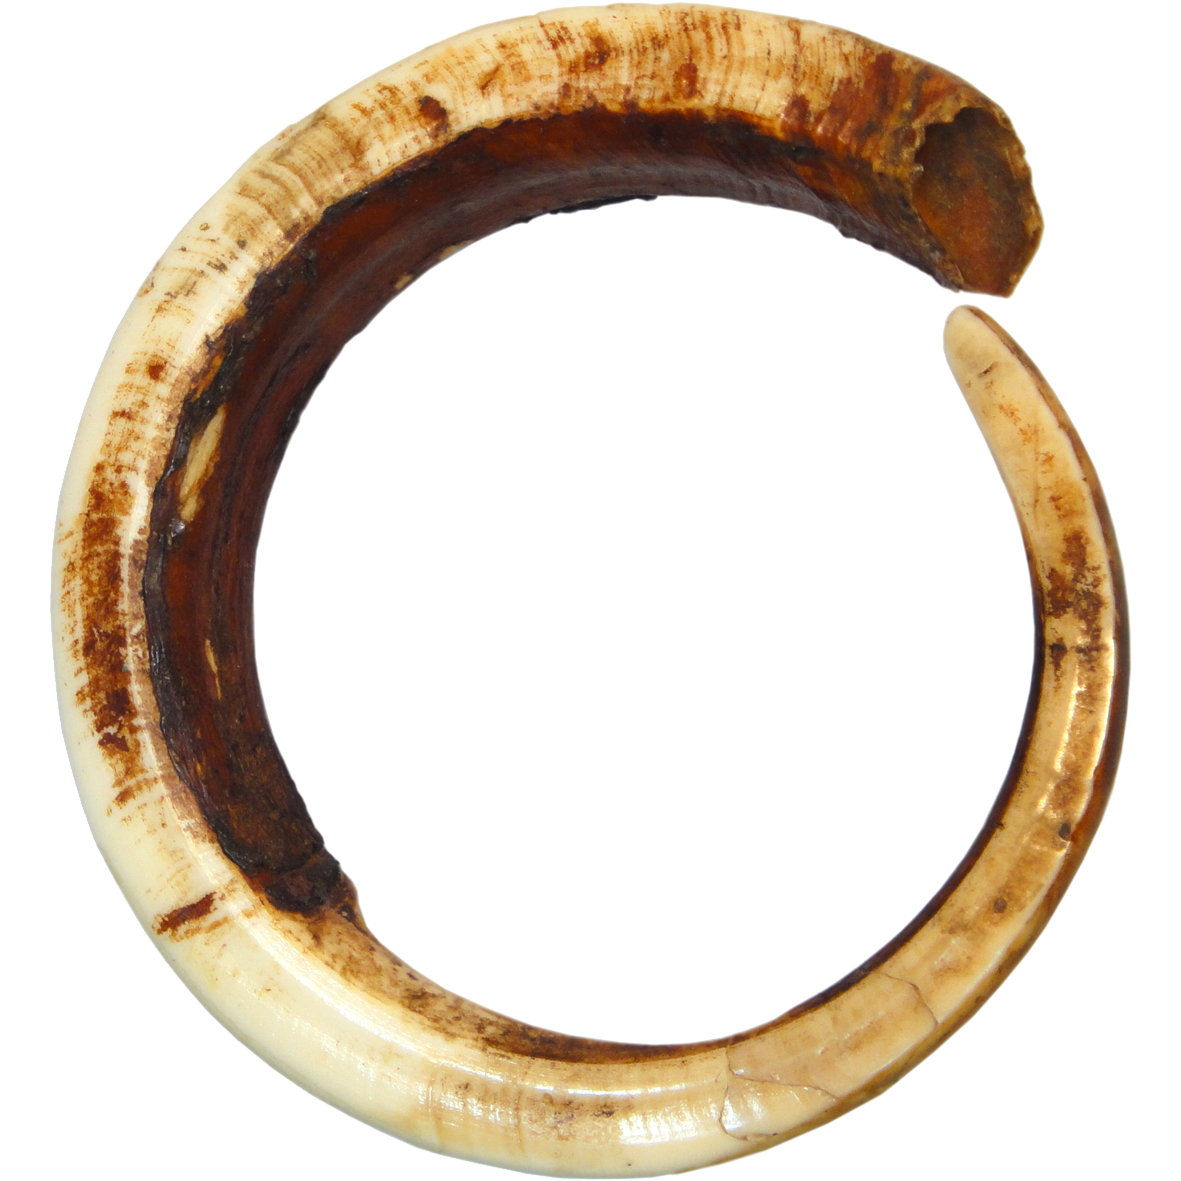 Papua New Guinea, North-East Coast, Full Circle Boar Tusk (restored) (obverse)